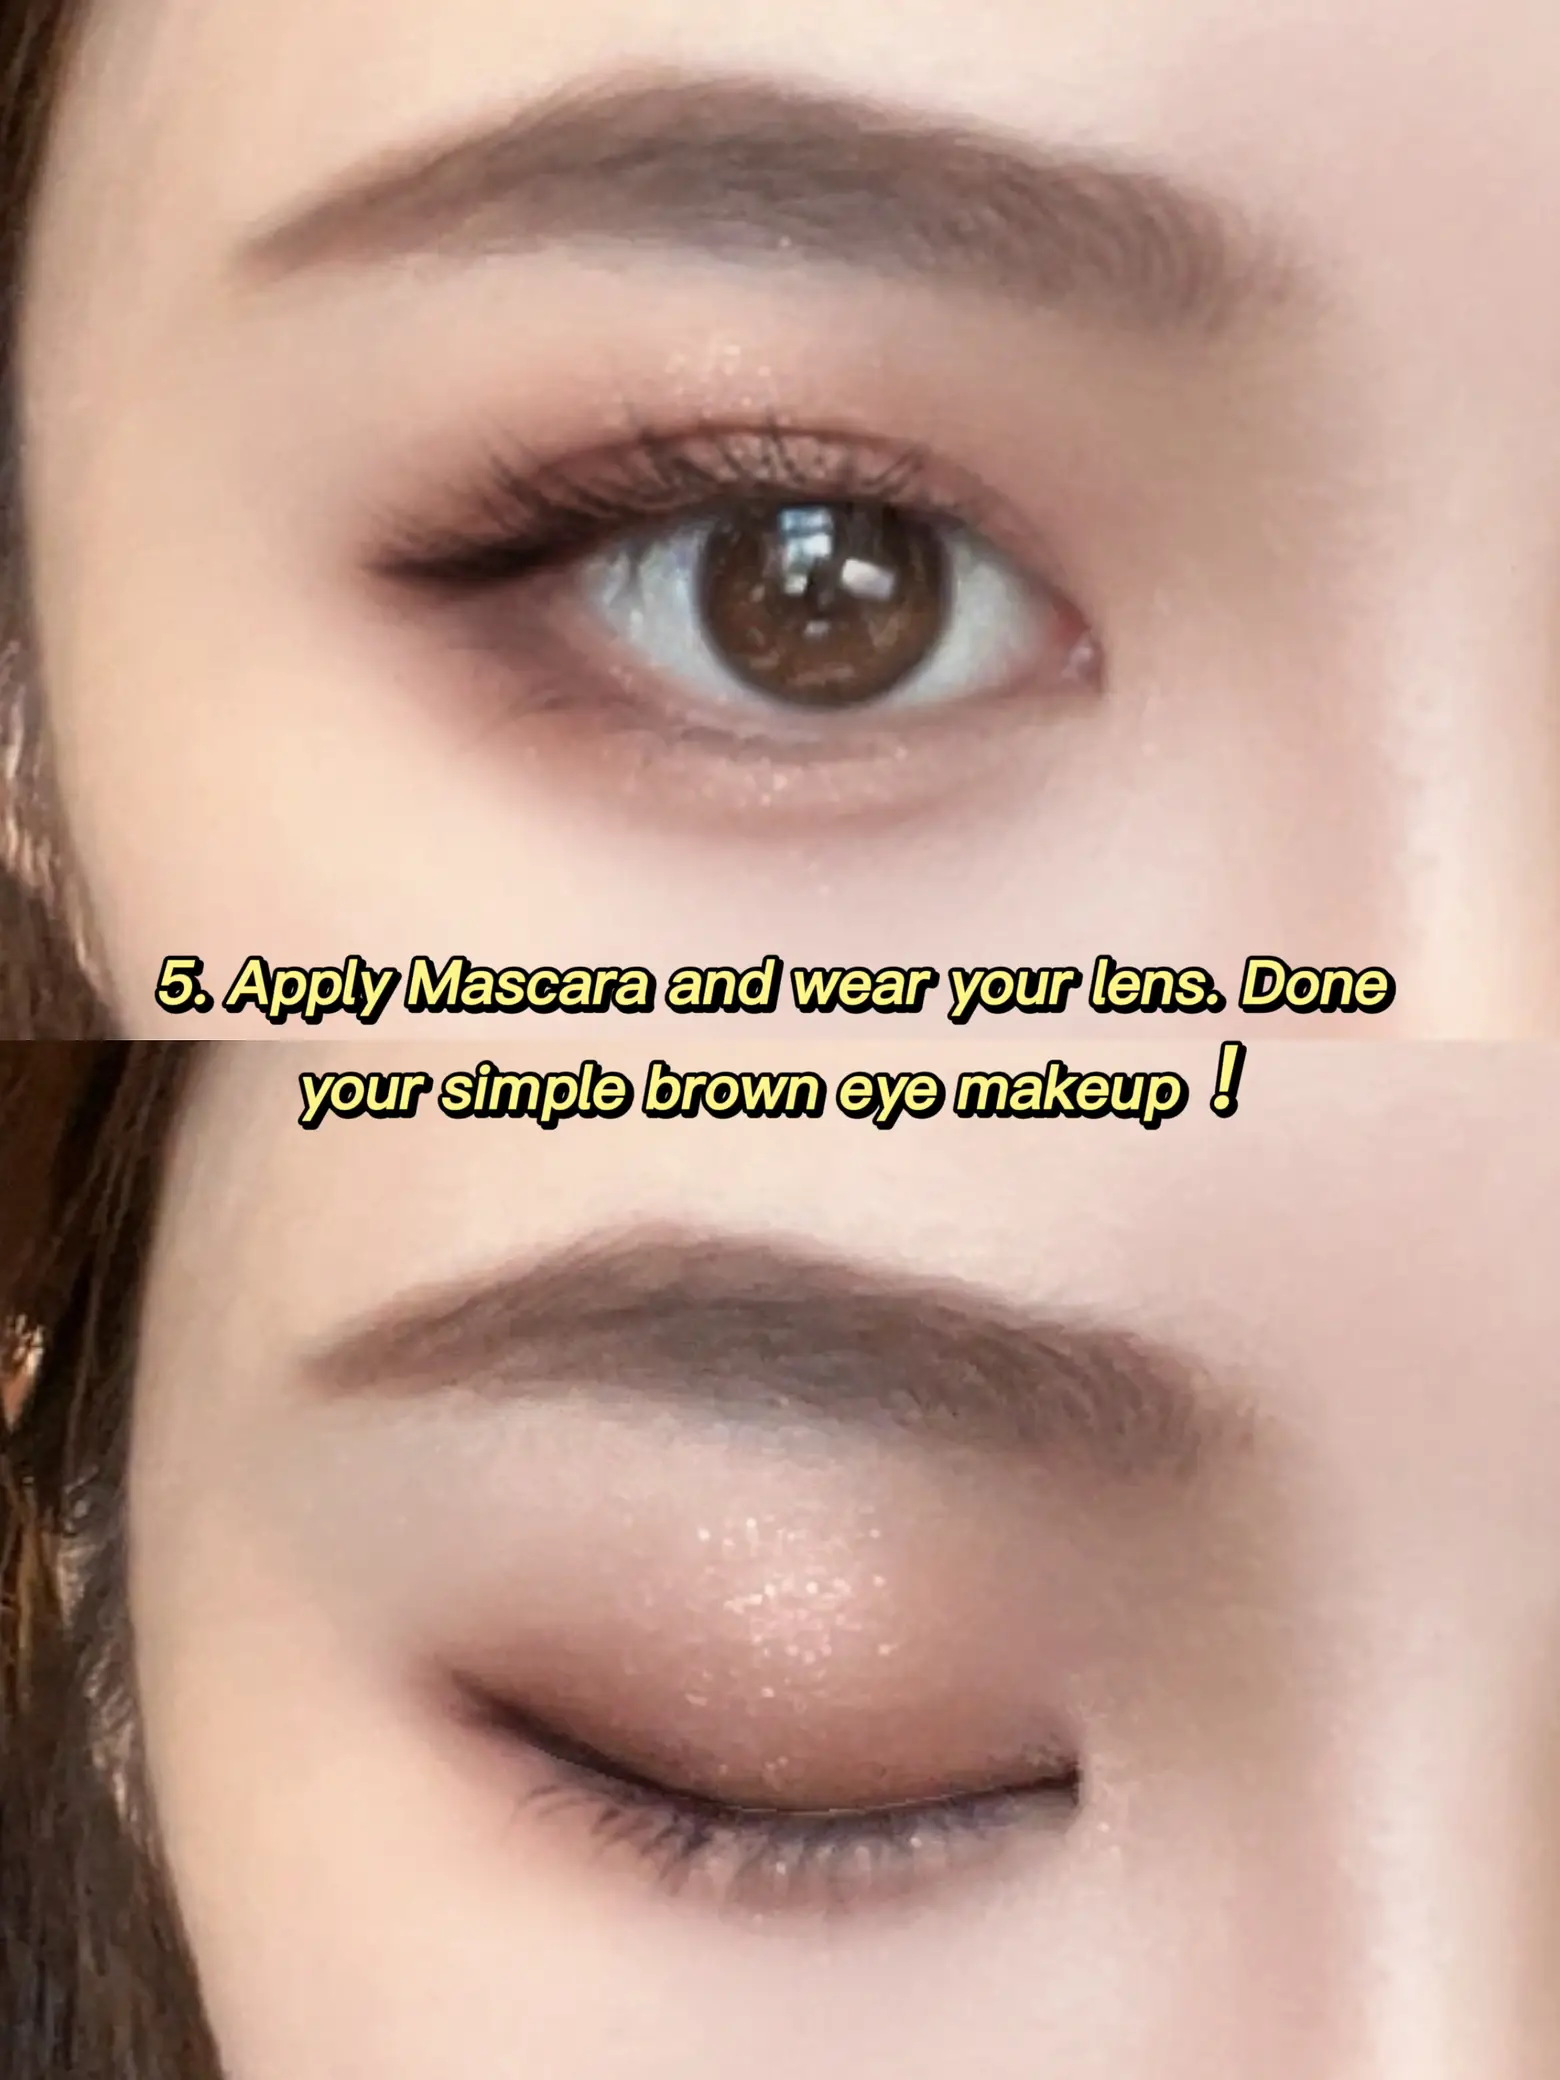 How To Make Simple Brown Eye Makeup